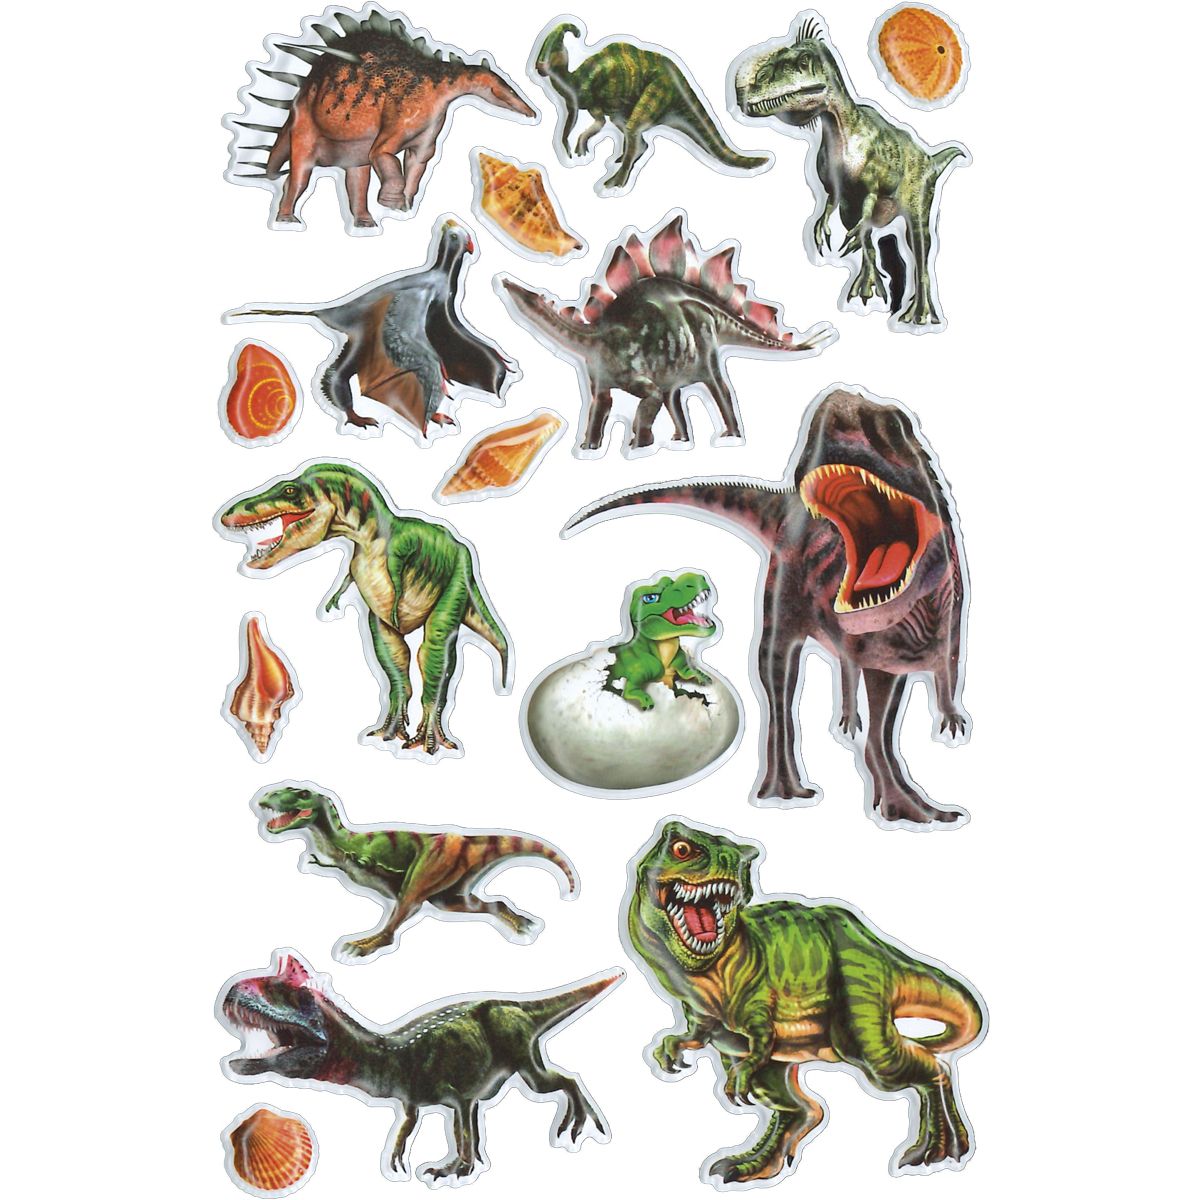 Naklejka (nalepka) Craft-Fun Series dinozaury Titanum (HFF-3)